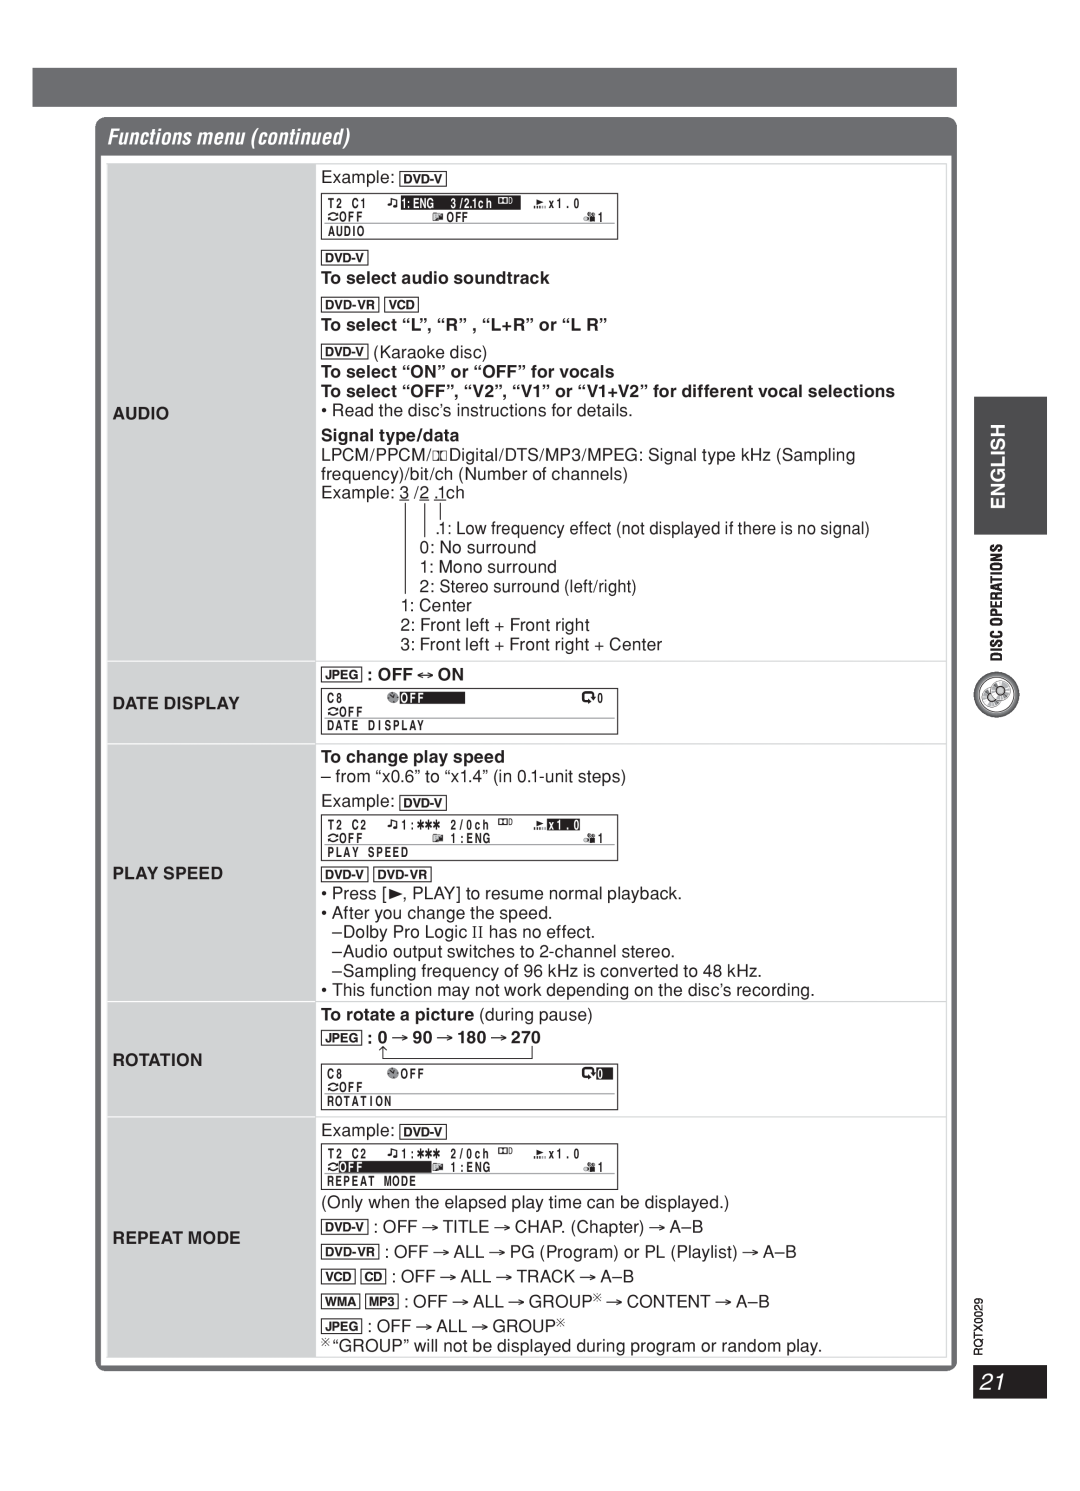 Panasonic sc-pt150 manual Functions menu continued 